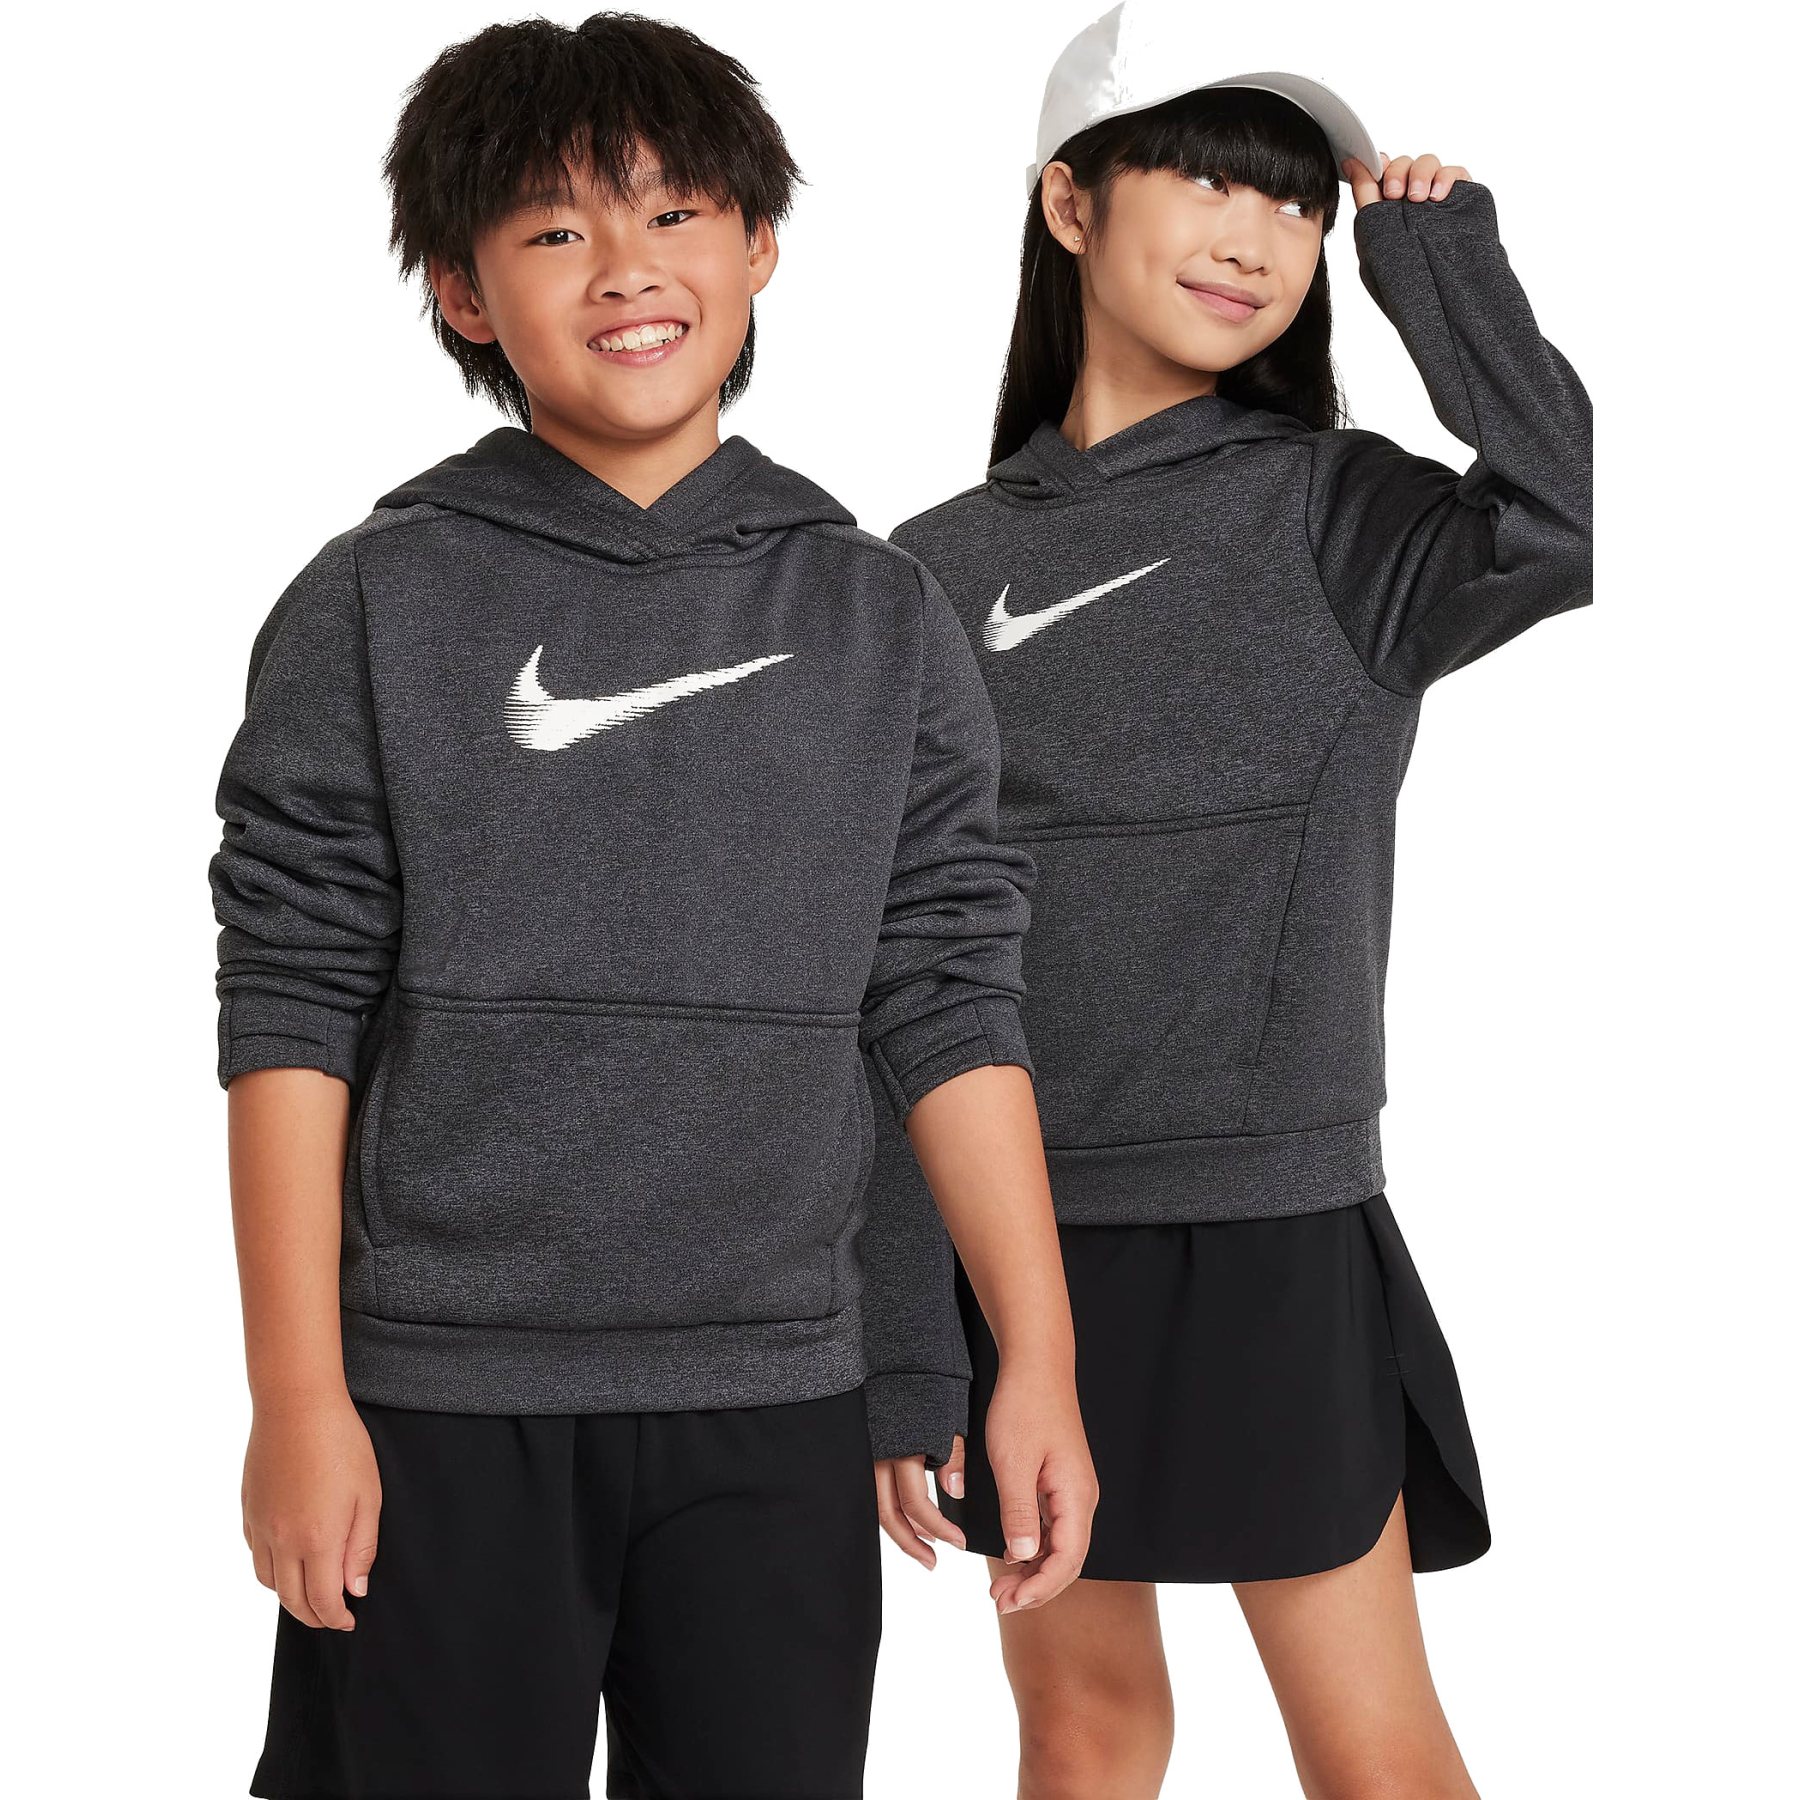 Nike Multi Big Kids' Therma-FIT Training Joggers.